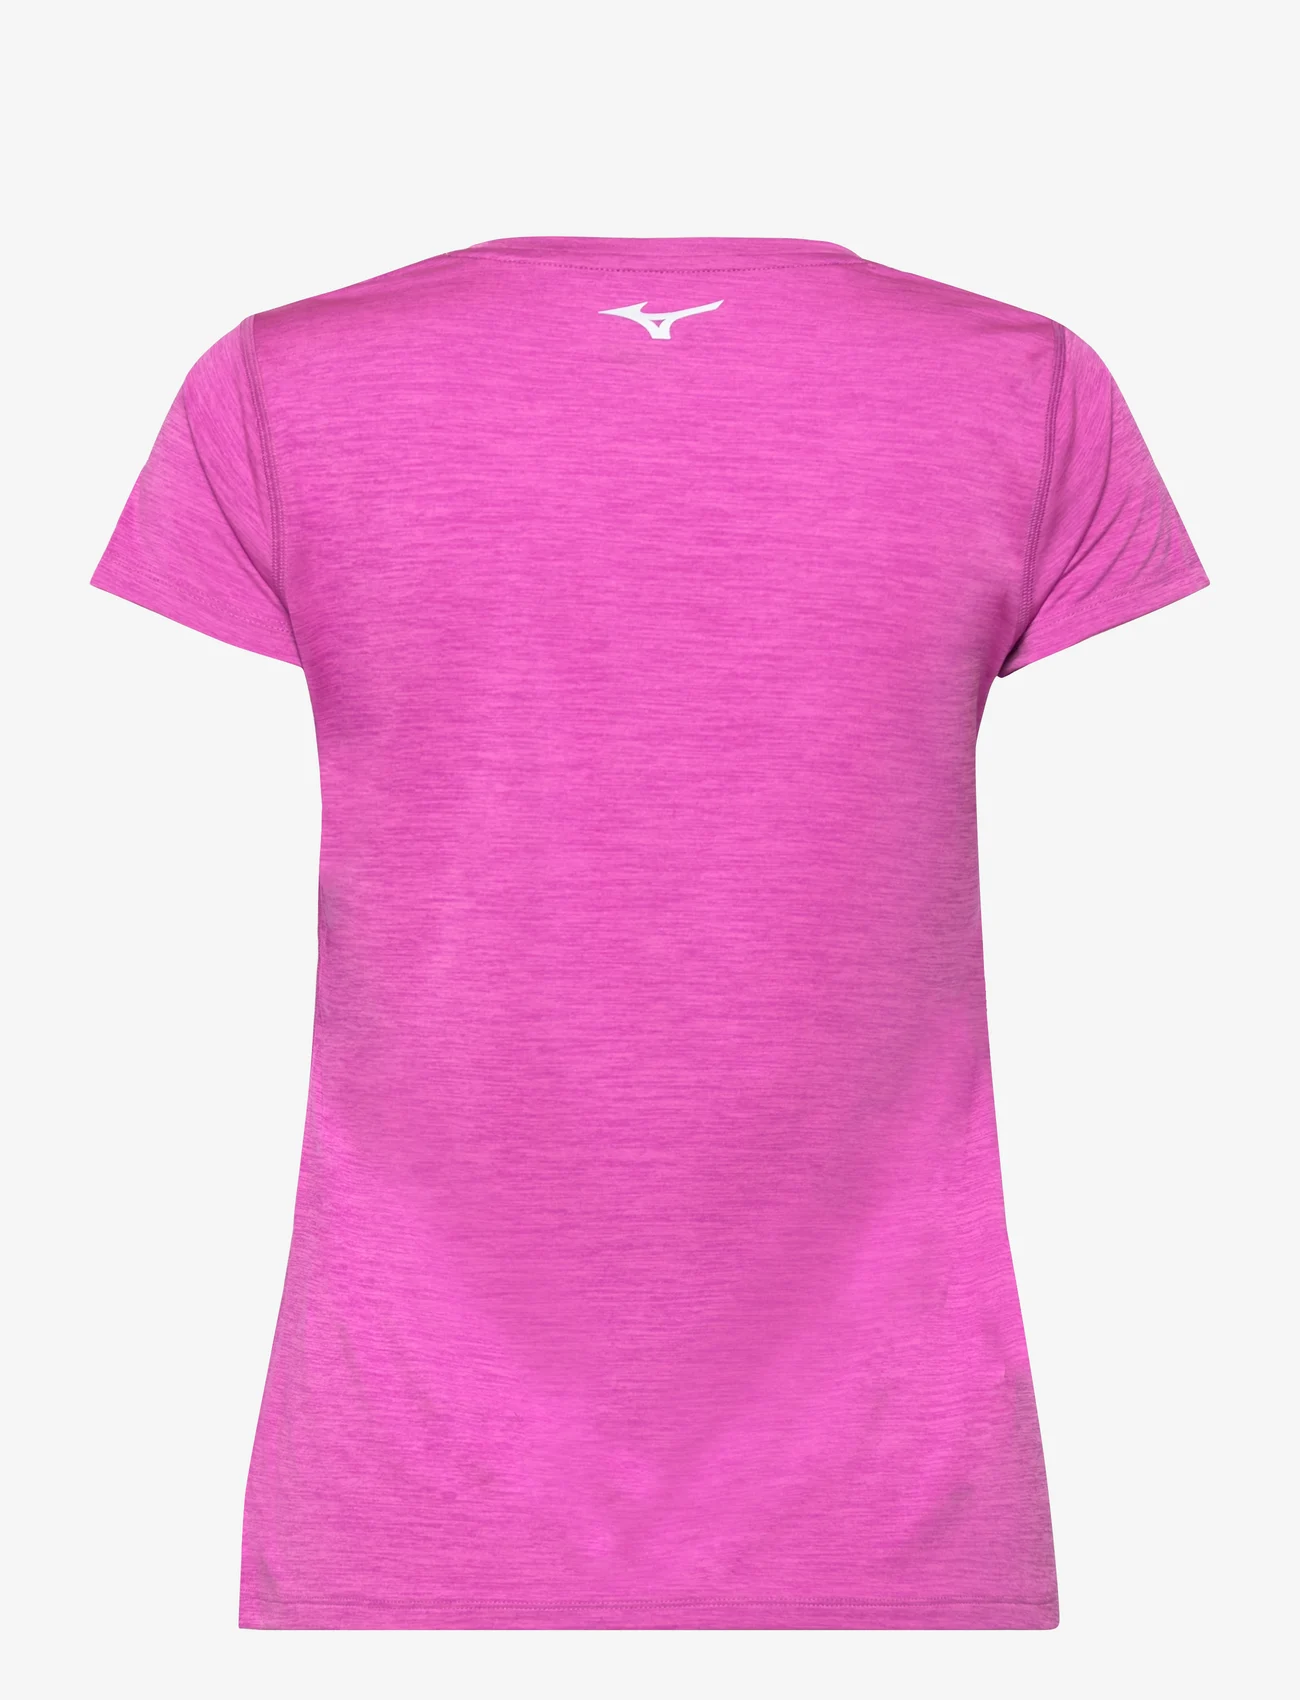 Mizuno - Impulse Core Tee(W) - t-shirts - pink - 1